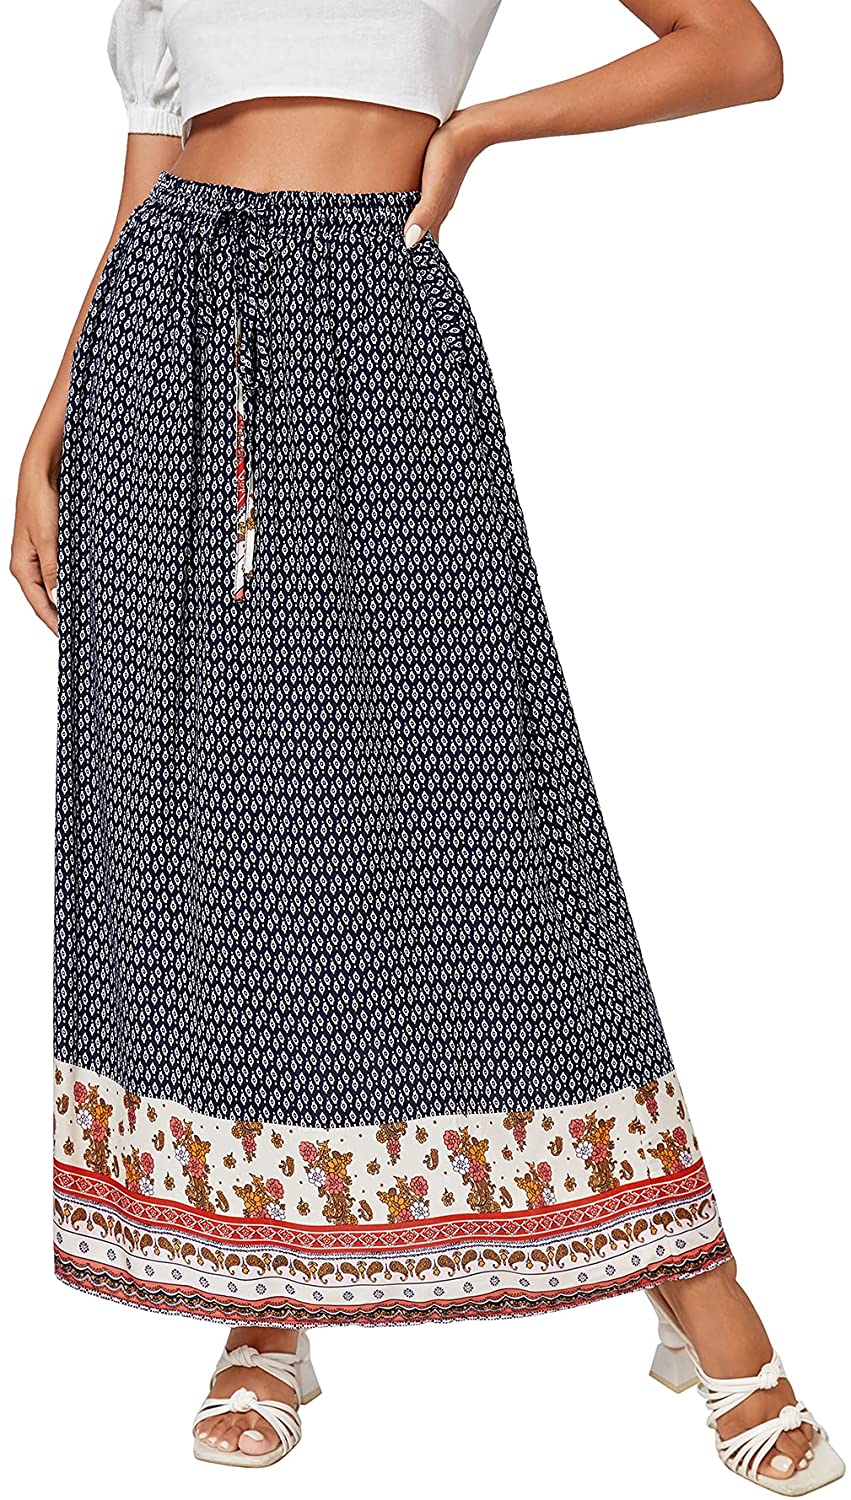 Milumia Women's Boho Vintage Print Pockets A Line Maxi Skirt